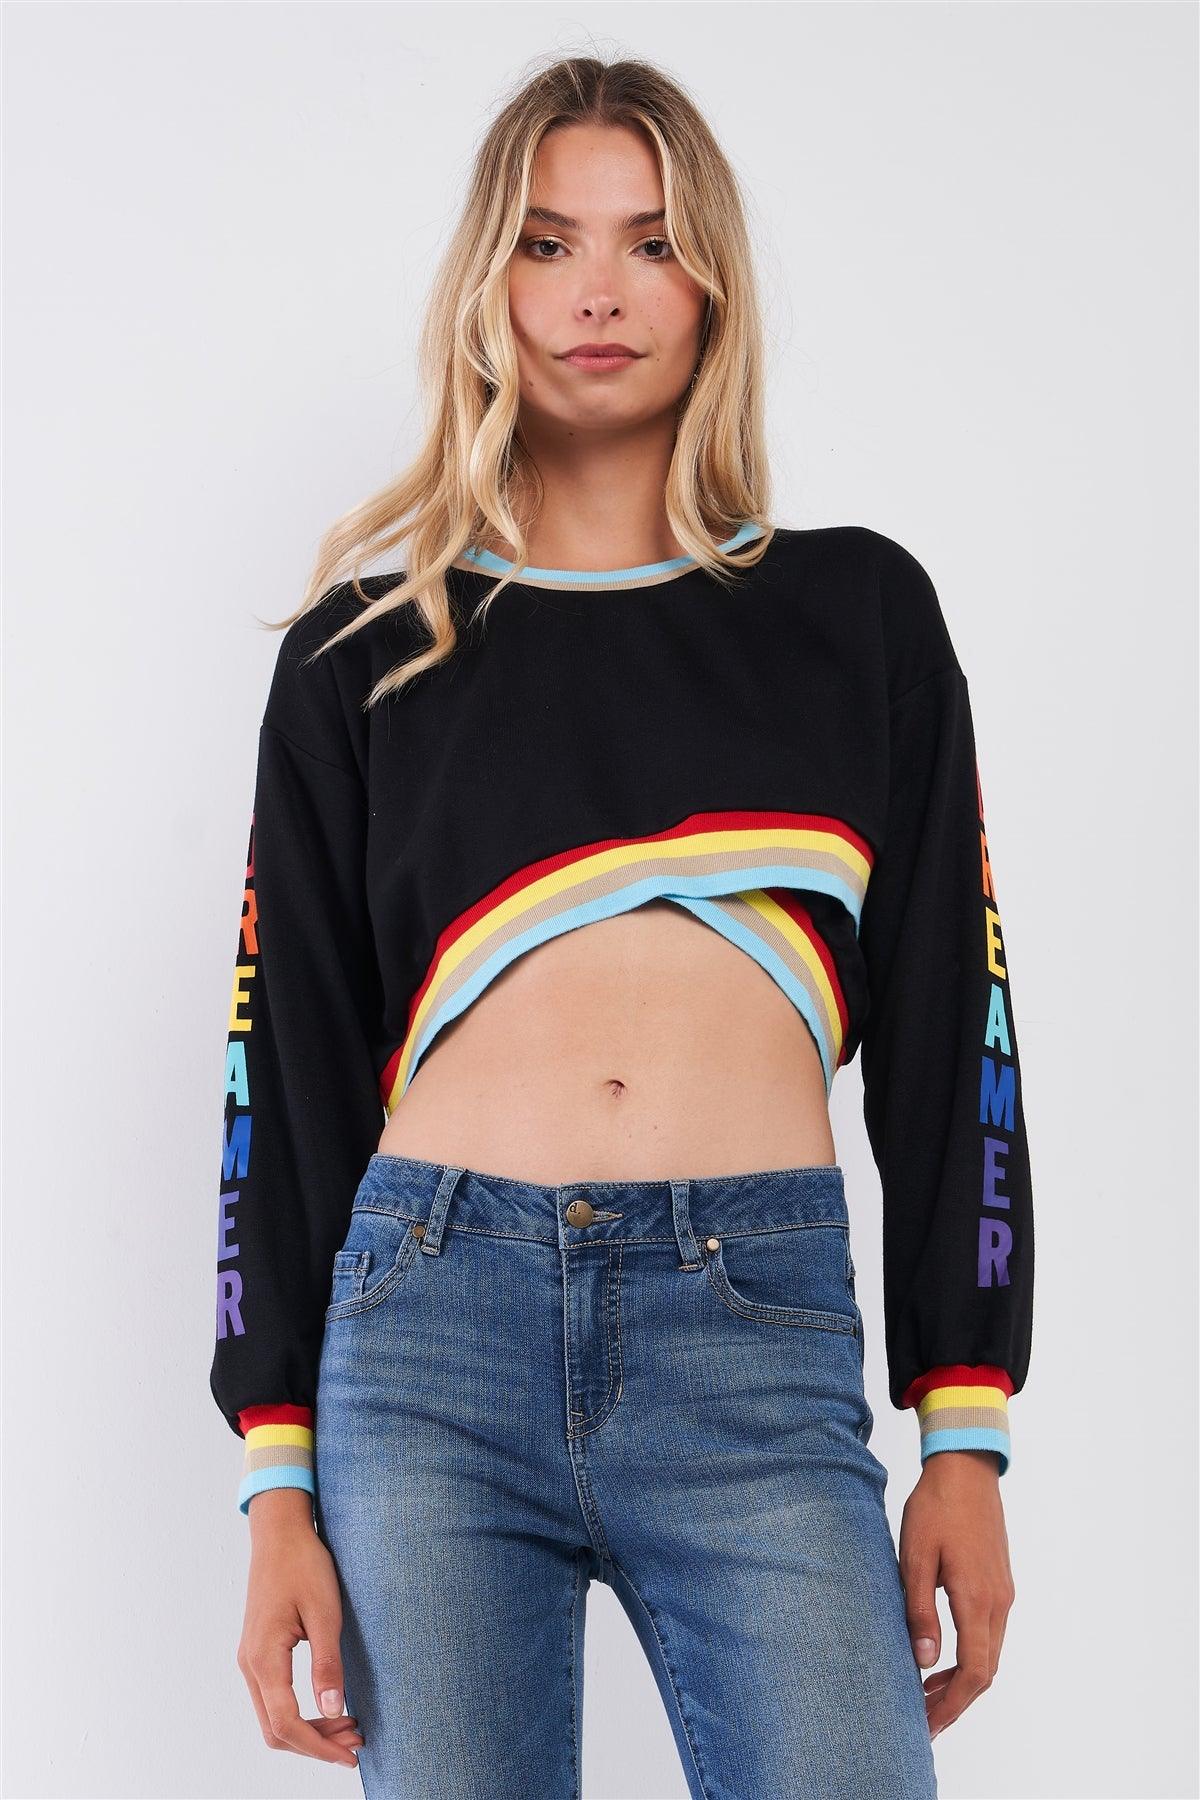 Dreamer Black & Rainbow Asymmetrical Long Sleeve Crop Top